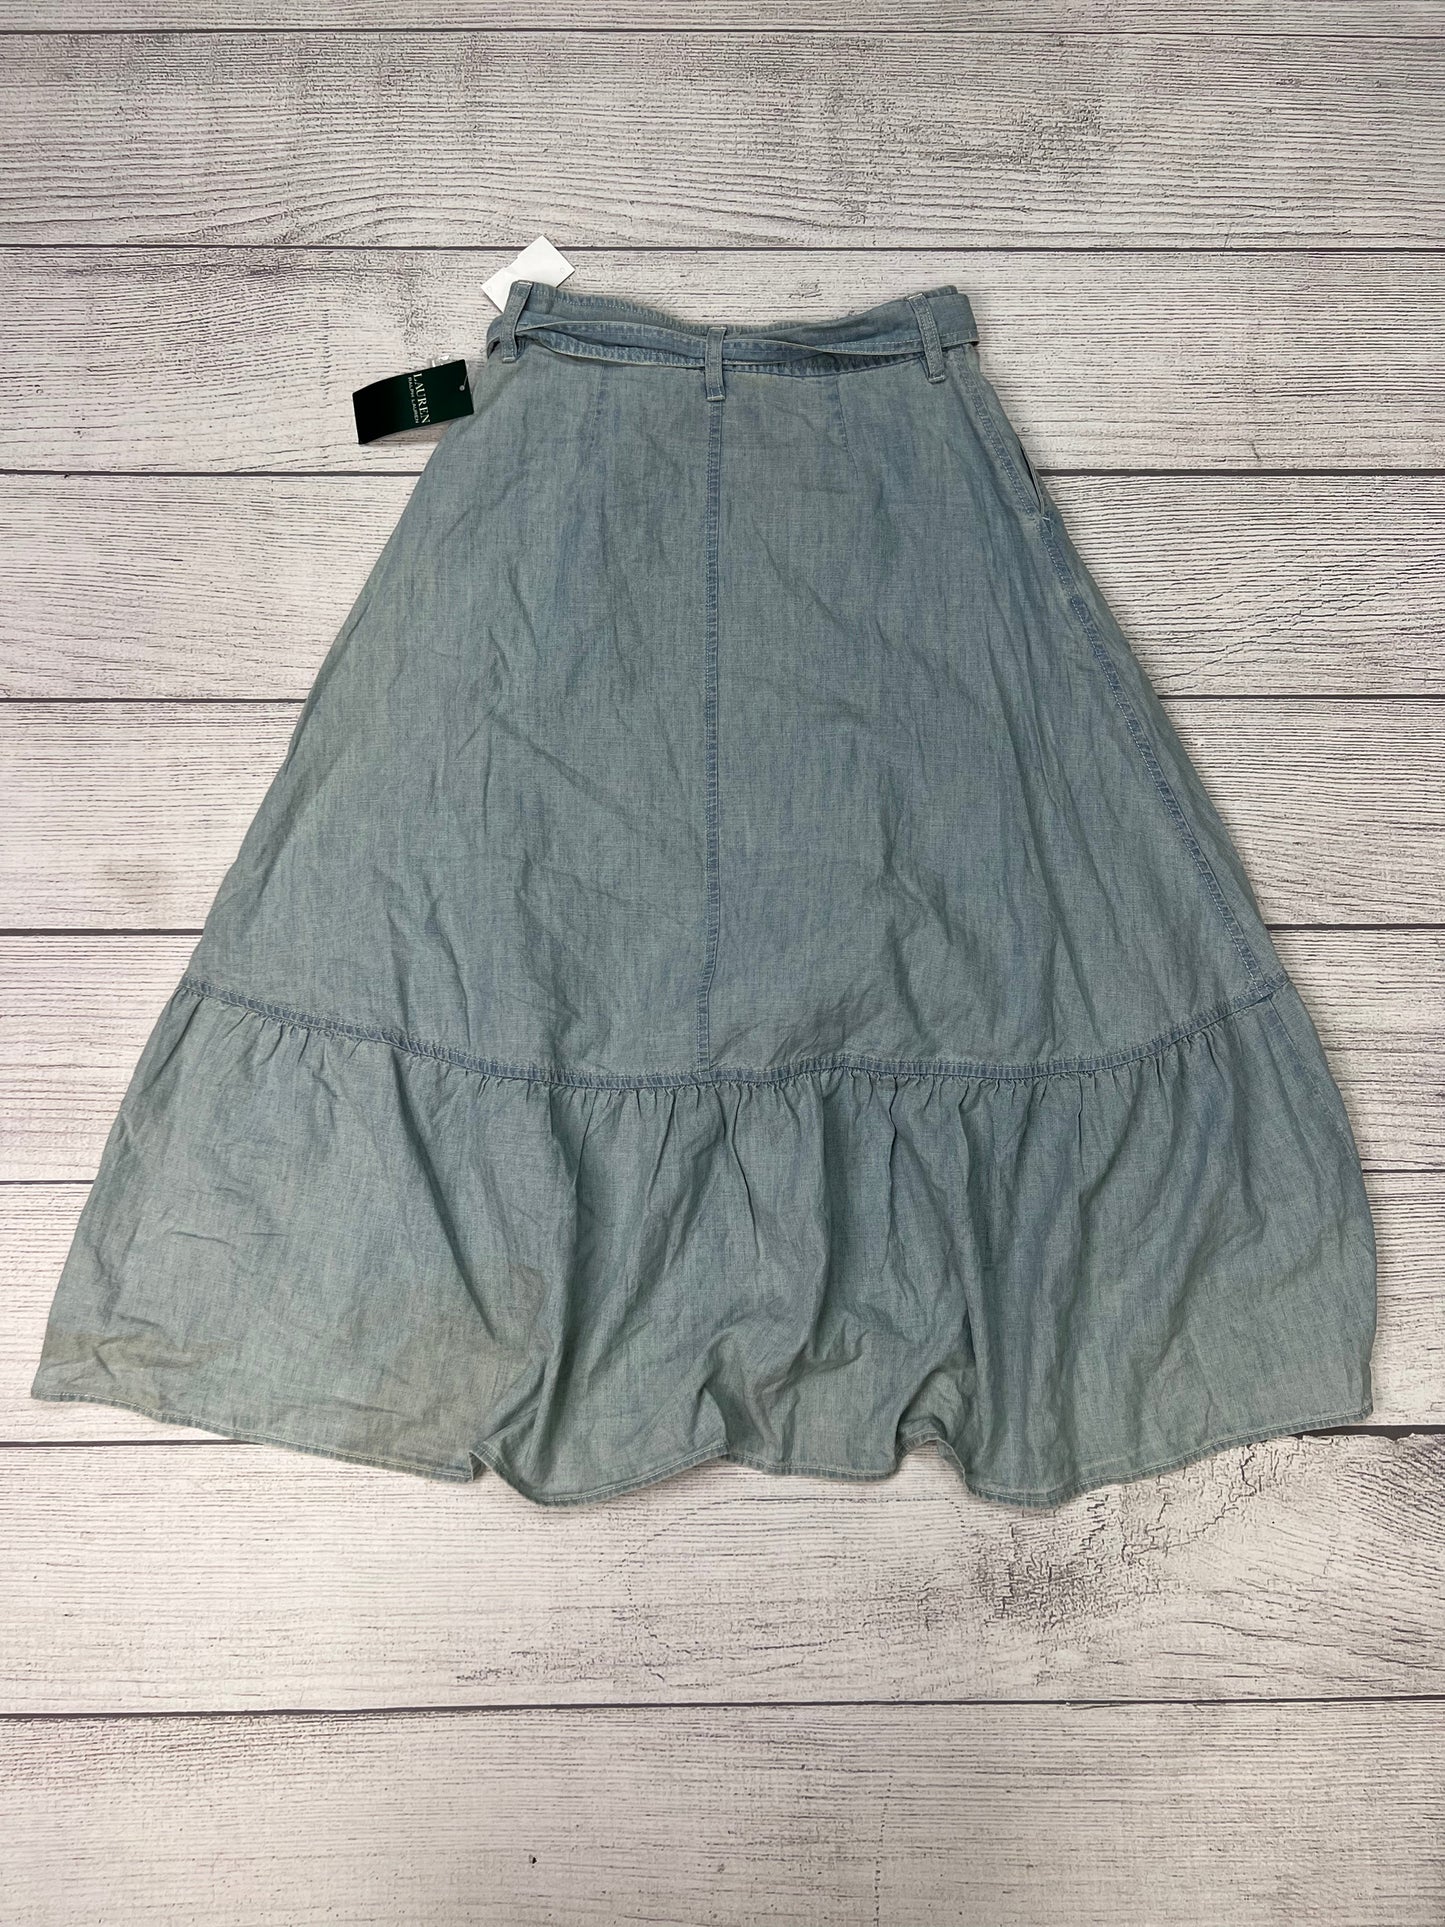 Denim Skirt Maxi Lauren By Ralph Lauren, Size 0